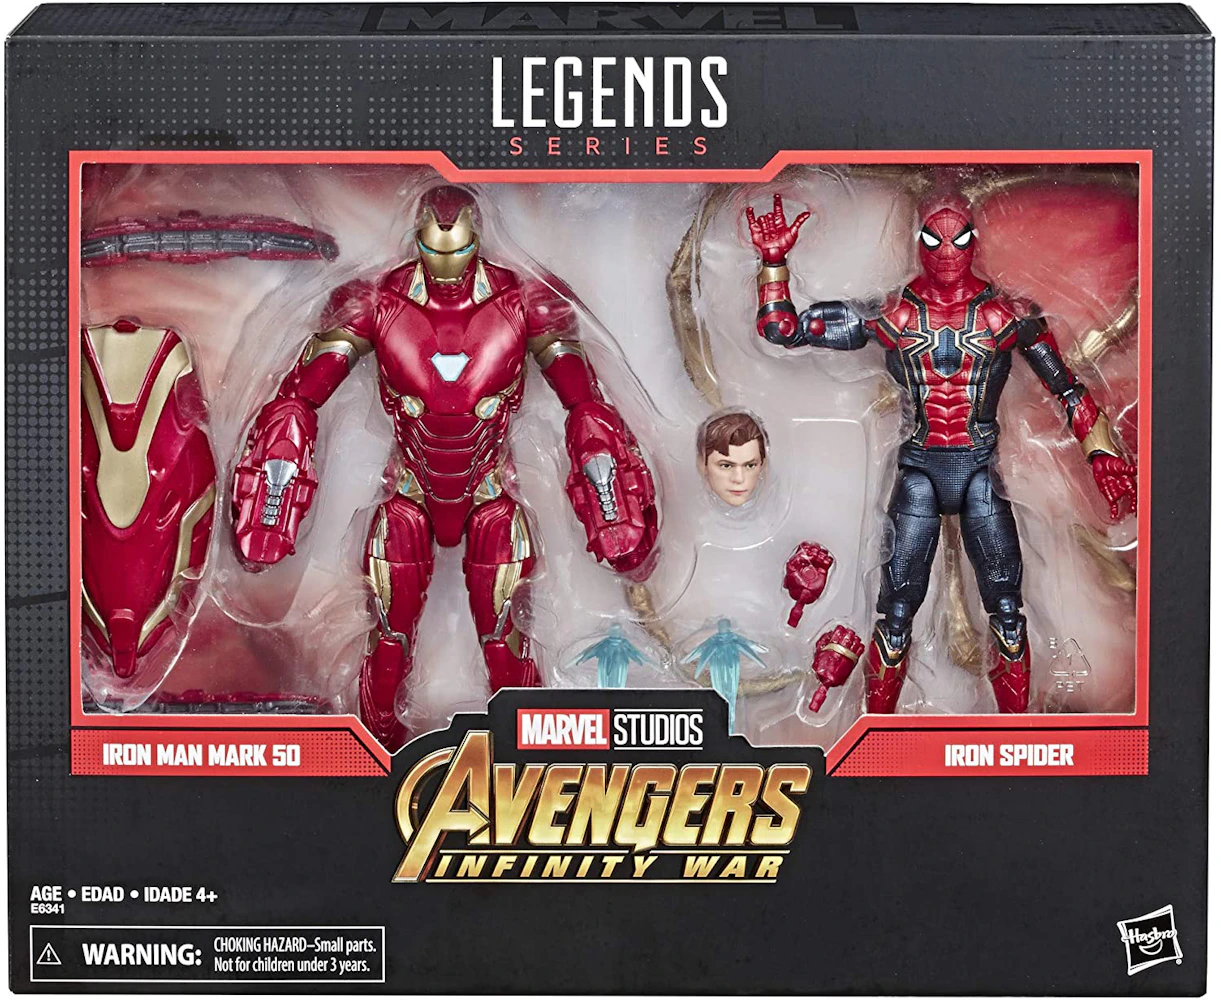 https://images.stockx.com/images/Hasbro-Marvel-Legends-Avengers-Infinity-War-Iron-Man-Mark-50-Iron-Spider-2-Pack-Action-Figure.jpg?fit=fill&bg=FFFFFF&w=700&h=500&fm=webp&auto=compress&q=90&dpr=2&trim=color&updated_at=1629985900